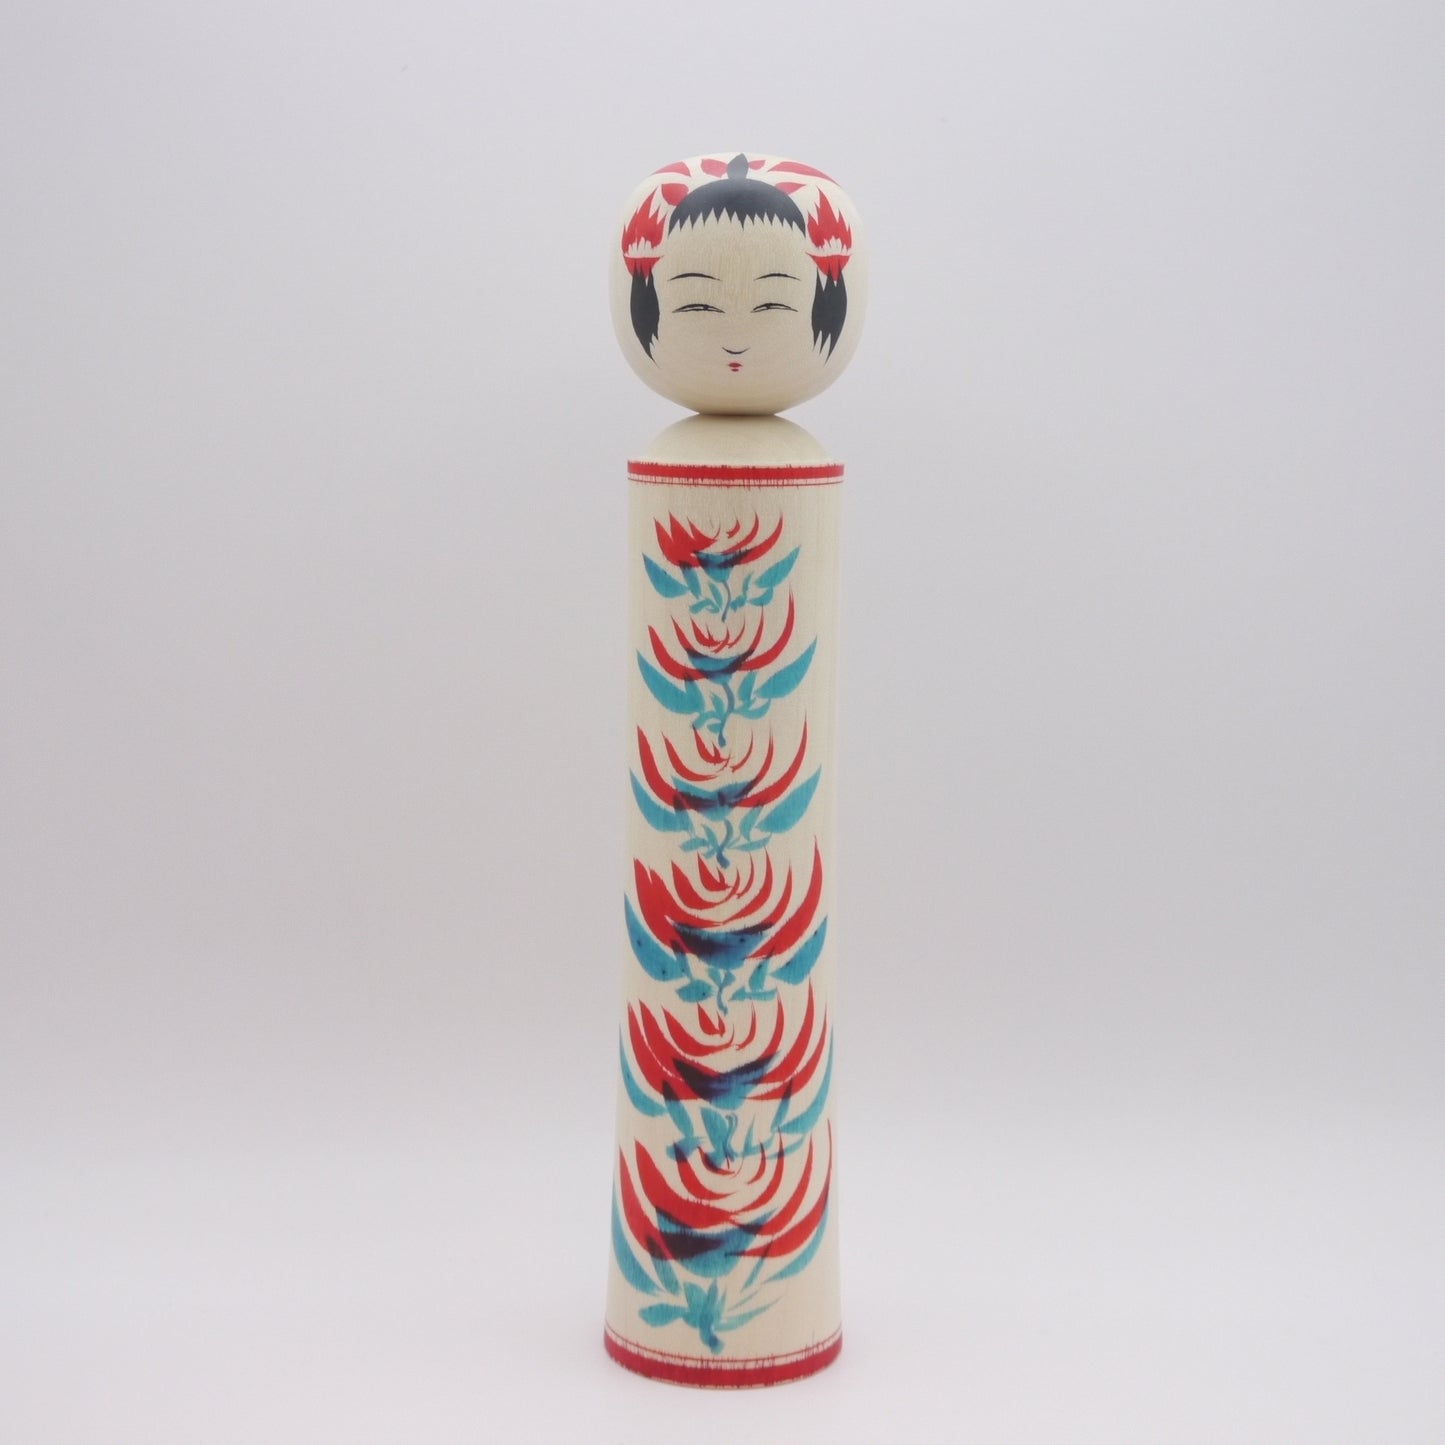 20cm Kokeshi doll by Tomohiro Matsuda